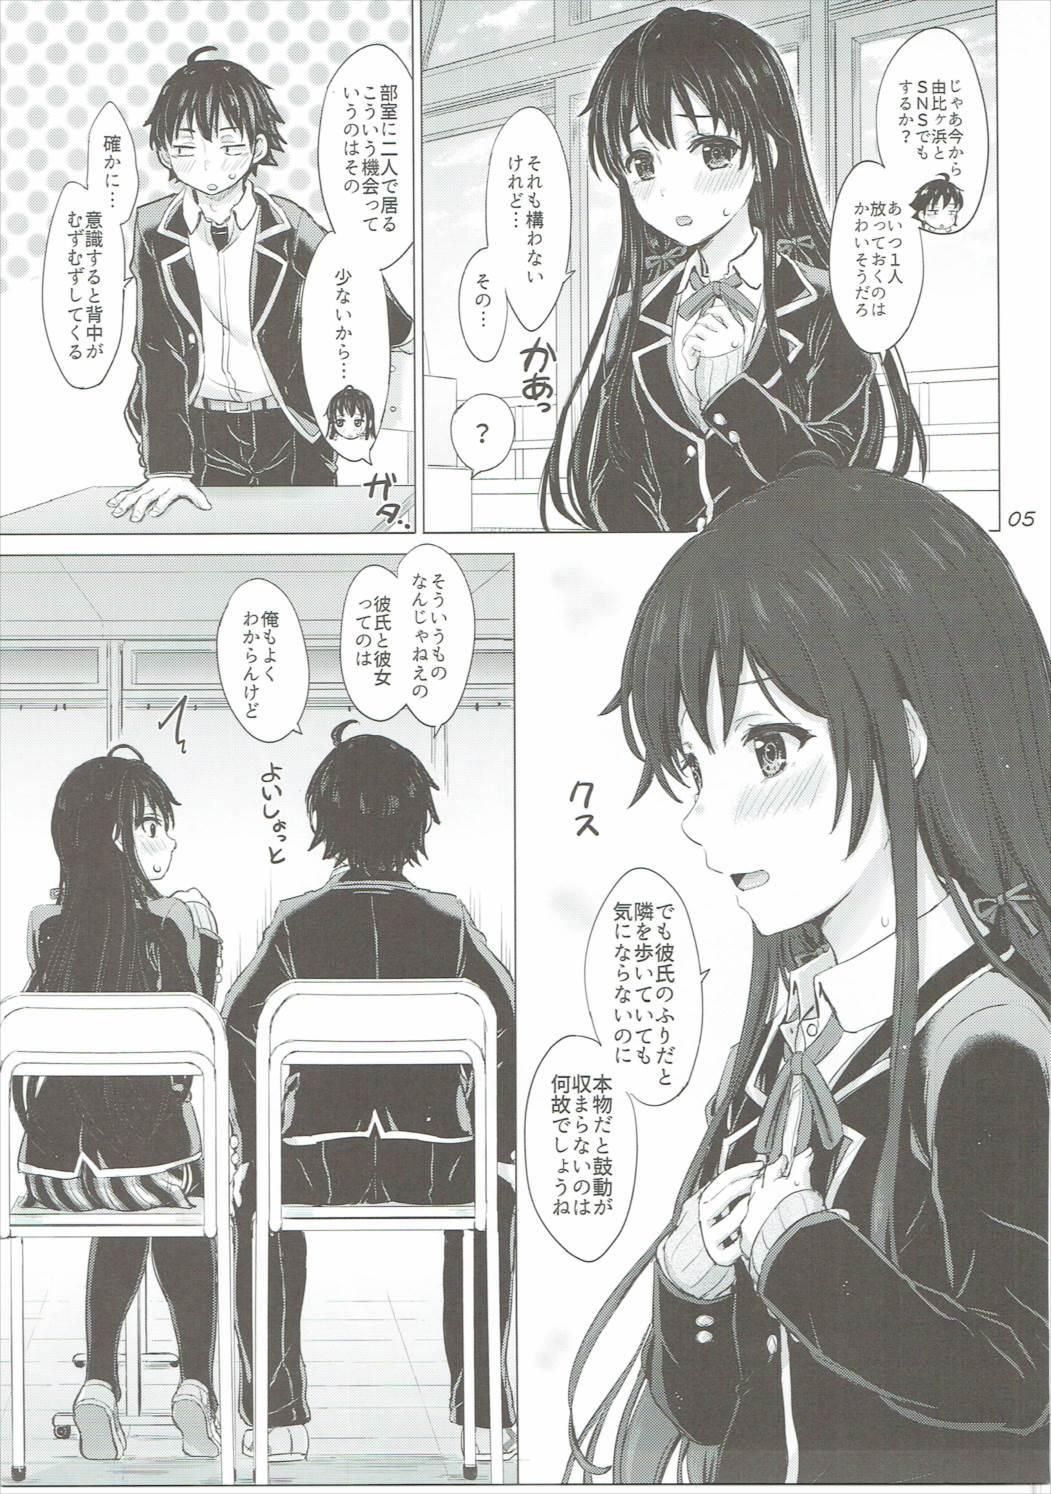 Exhibitionist Yukinon Again. - Yahari ore no seishun love come wa machigatteiru Polla - Page 4